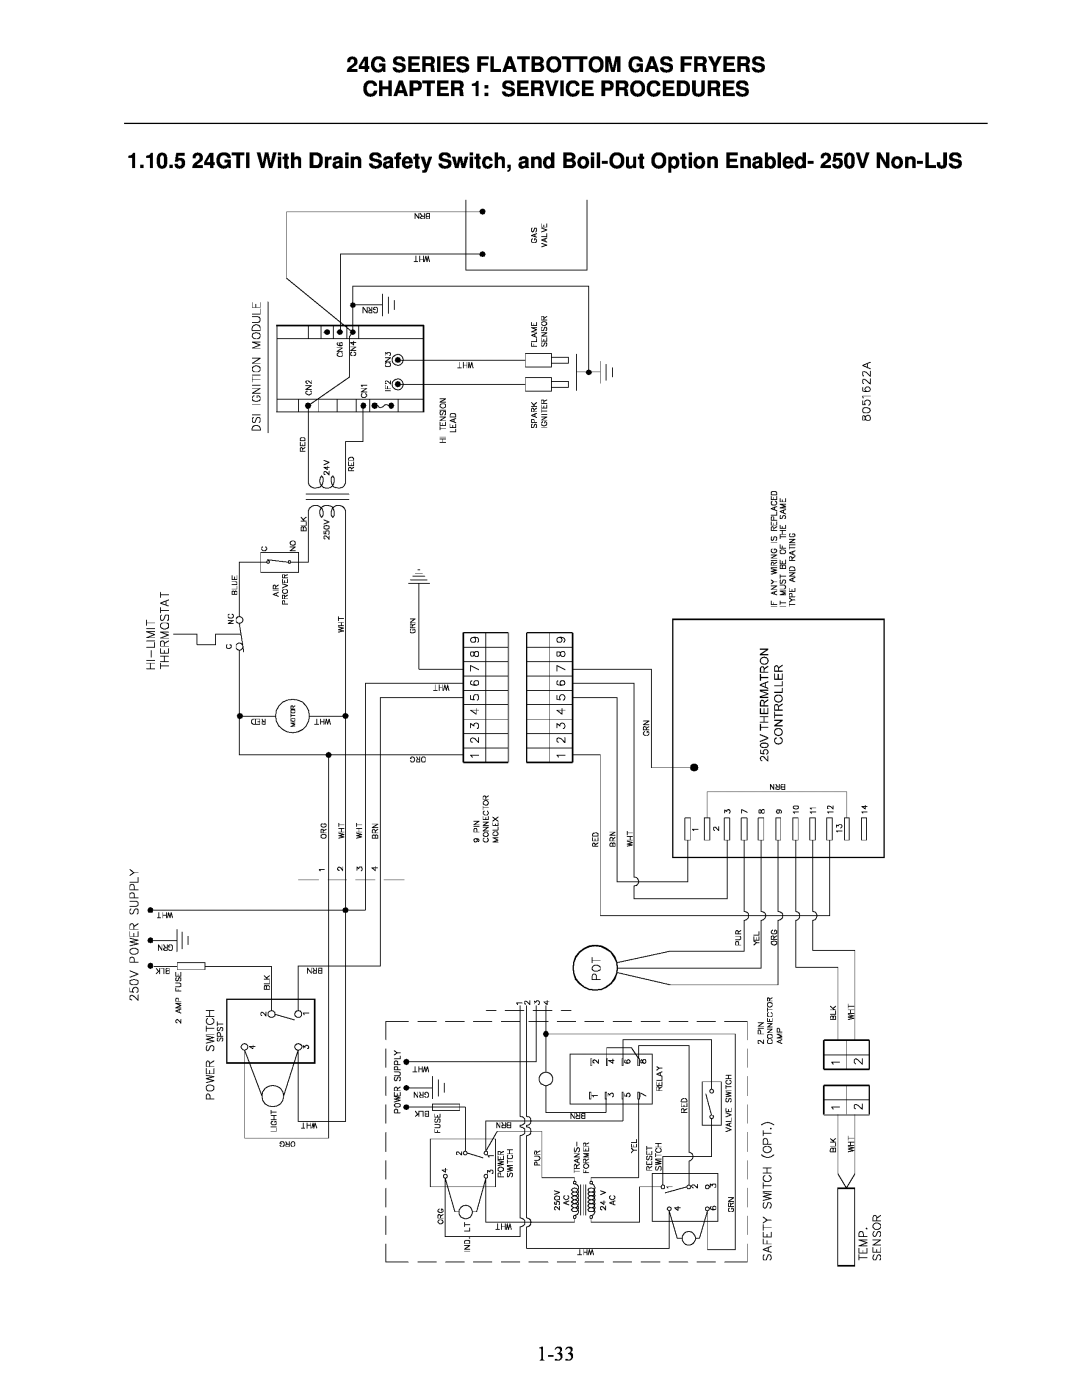 Frymaster 2424G, 1824G manual 24G SERIES FLATBOTTOM GAS FRYERS : SERVICE PROCEDURES 